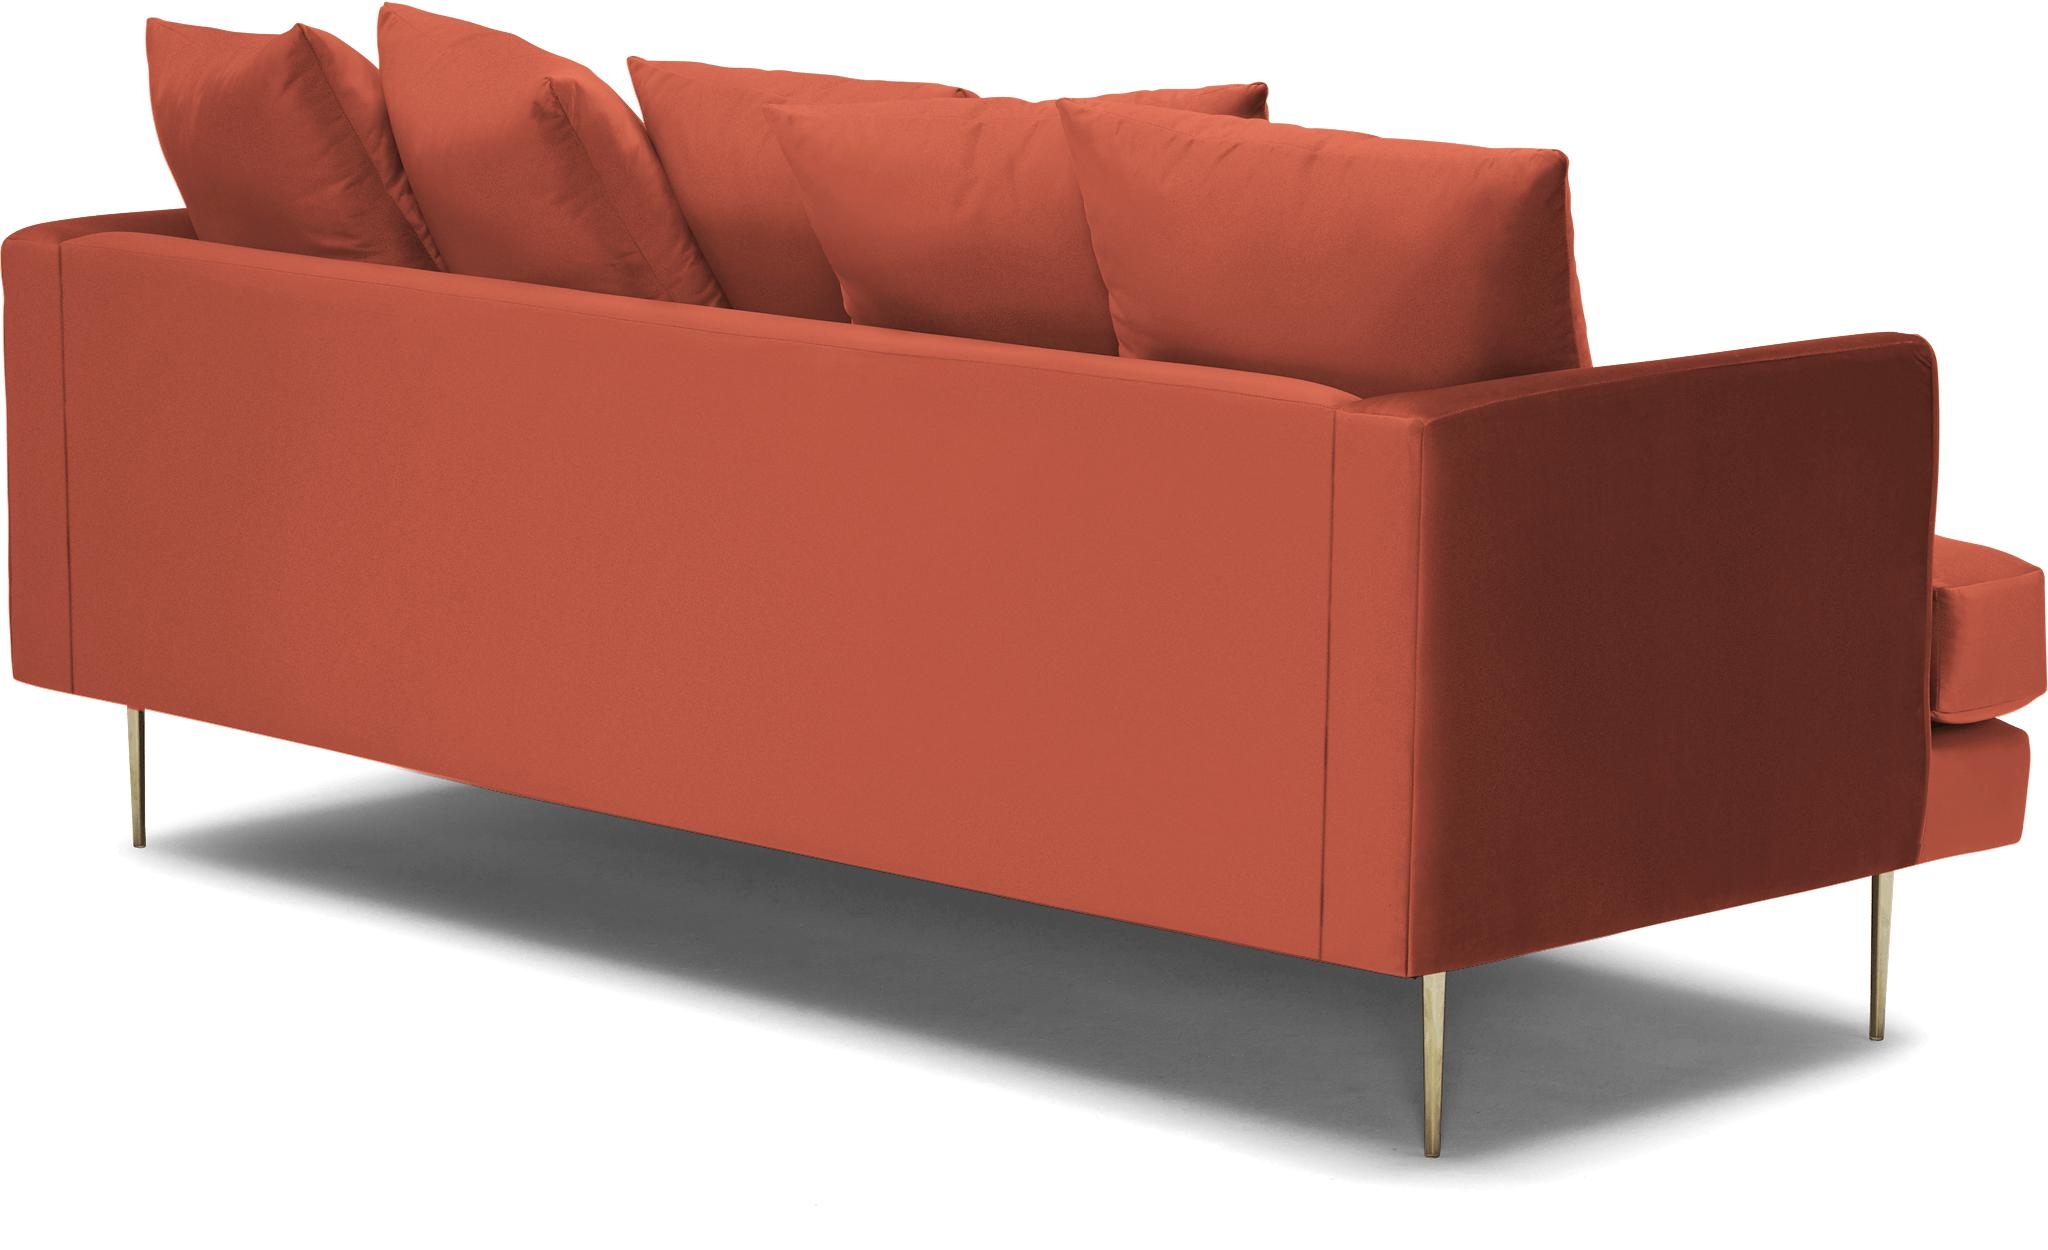 Orange Aime Mid Century Modern Sofa - Key Largo Coral - Image 3